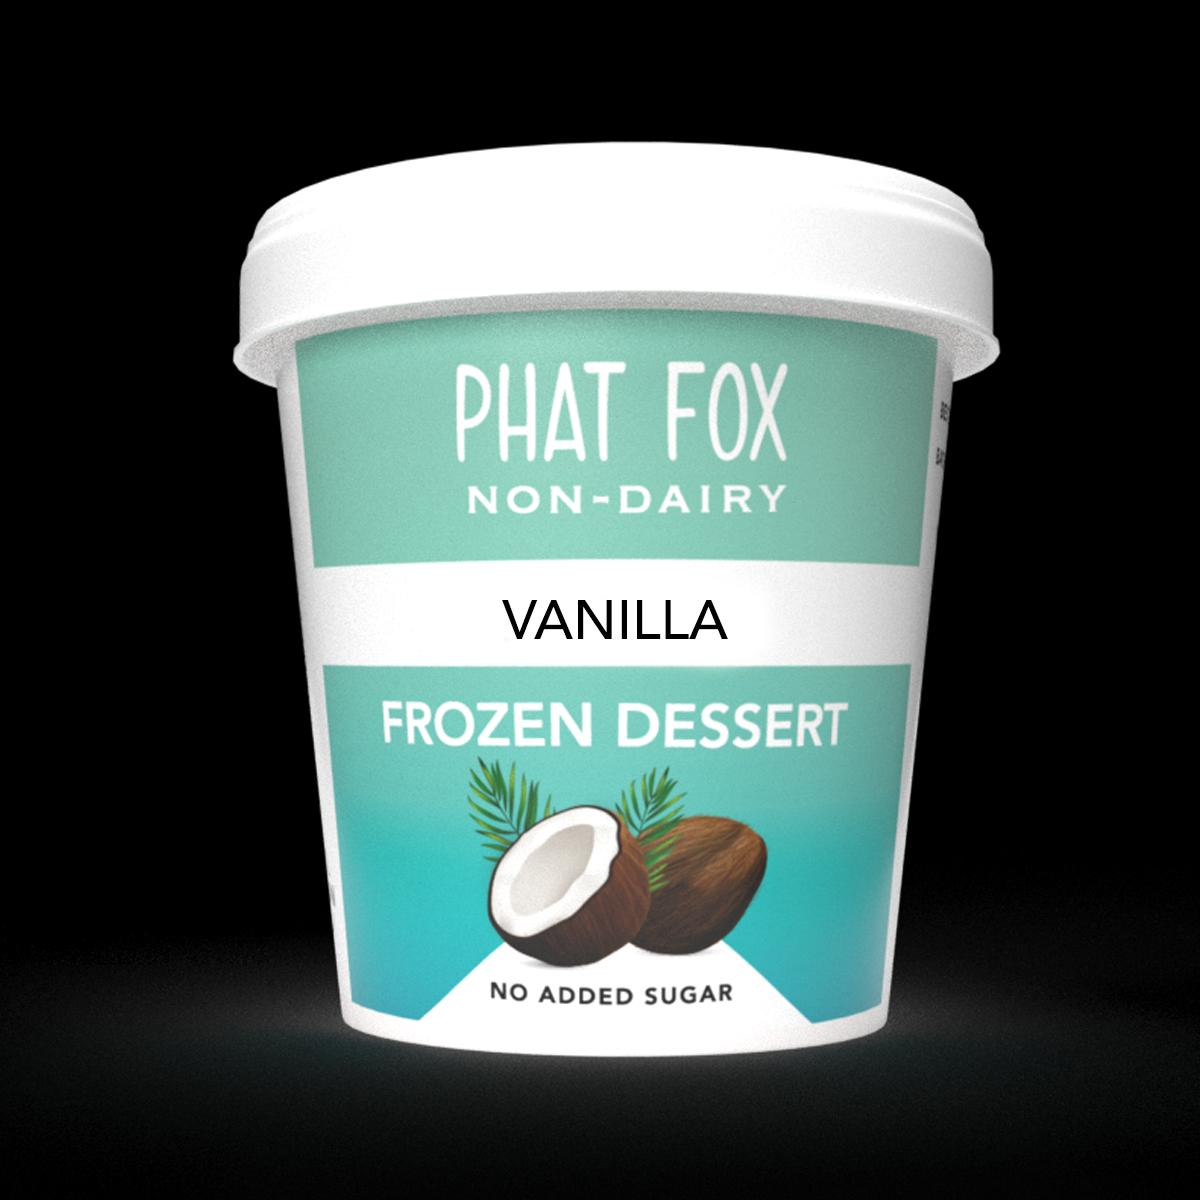 Phat fox non-dairy ice cream - Vanilla